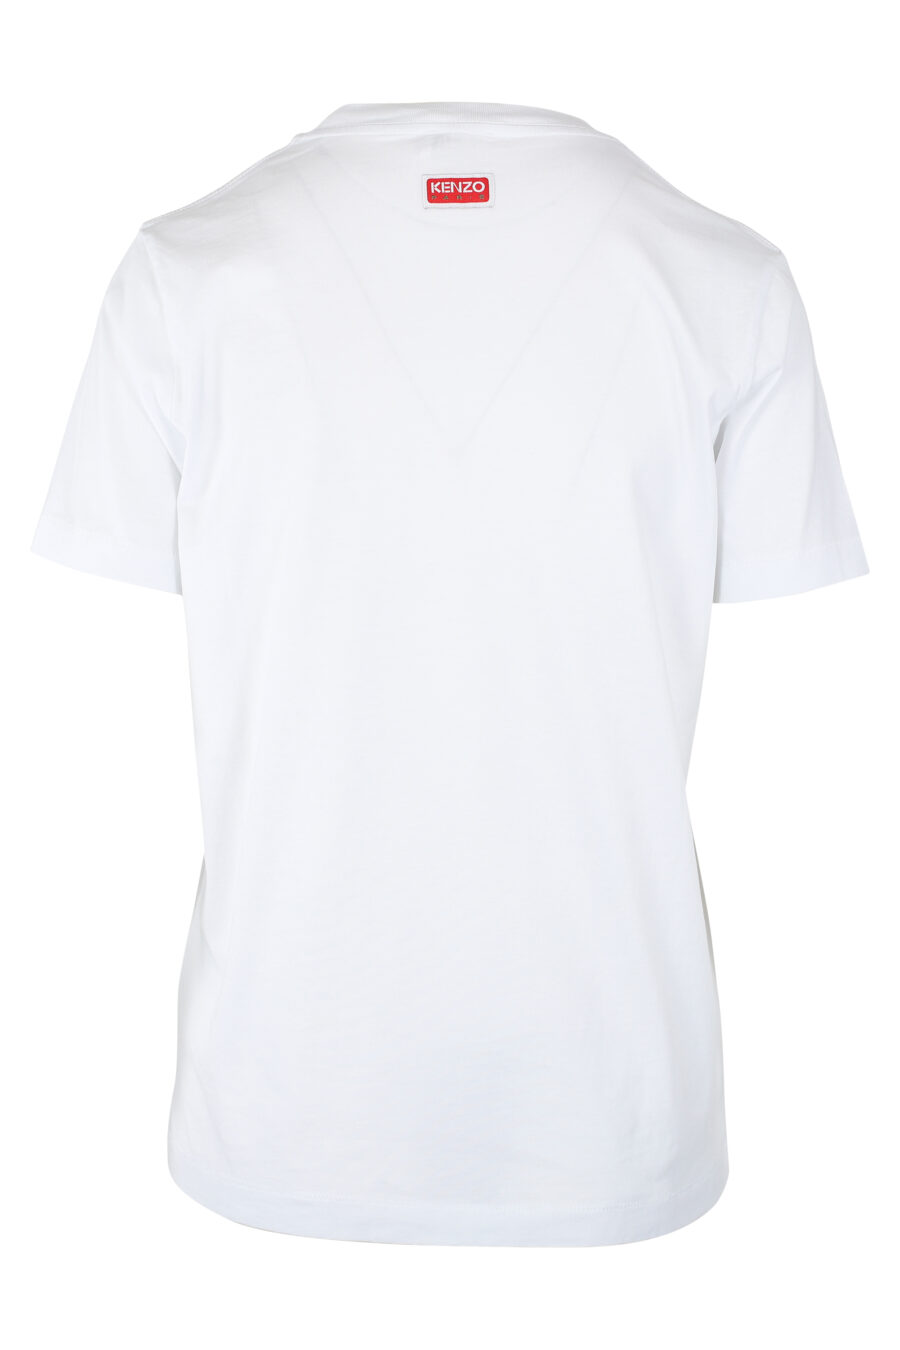 T-shirt branca com maxilogo de flores cor de laranja - IMG 9529